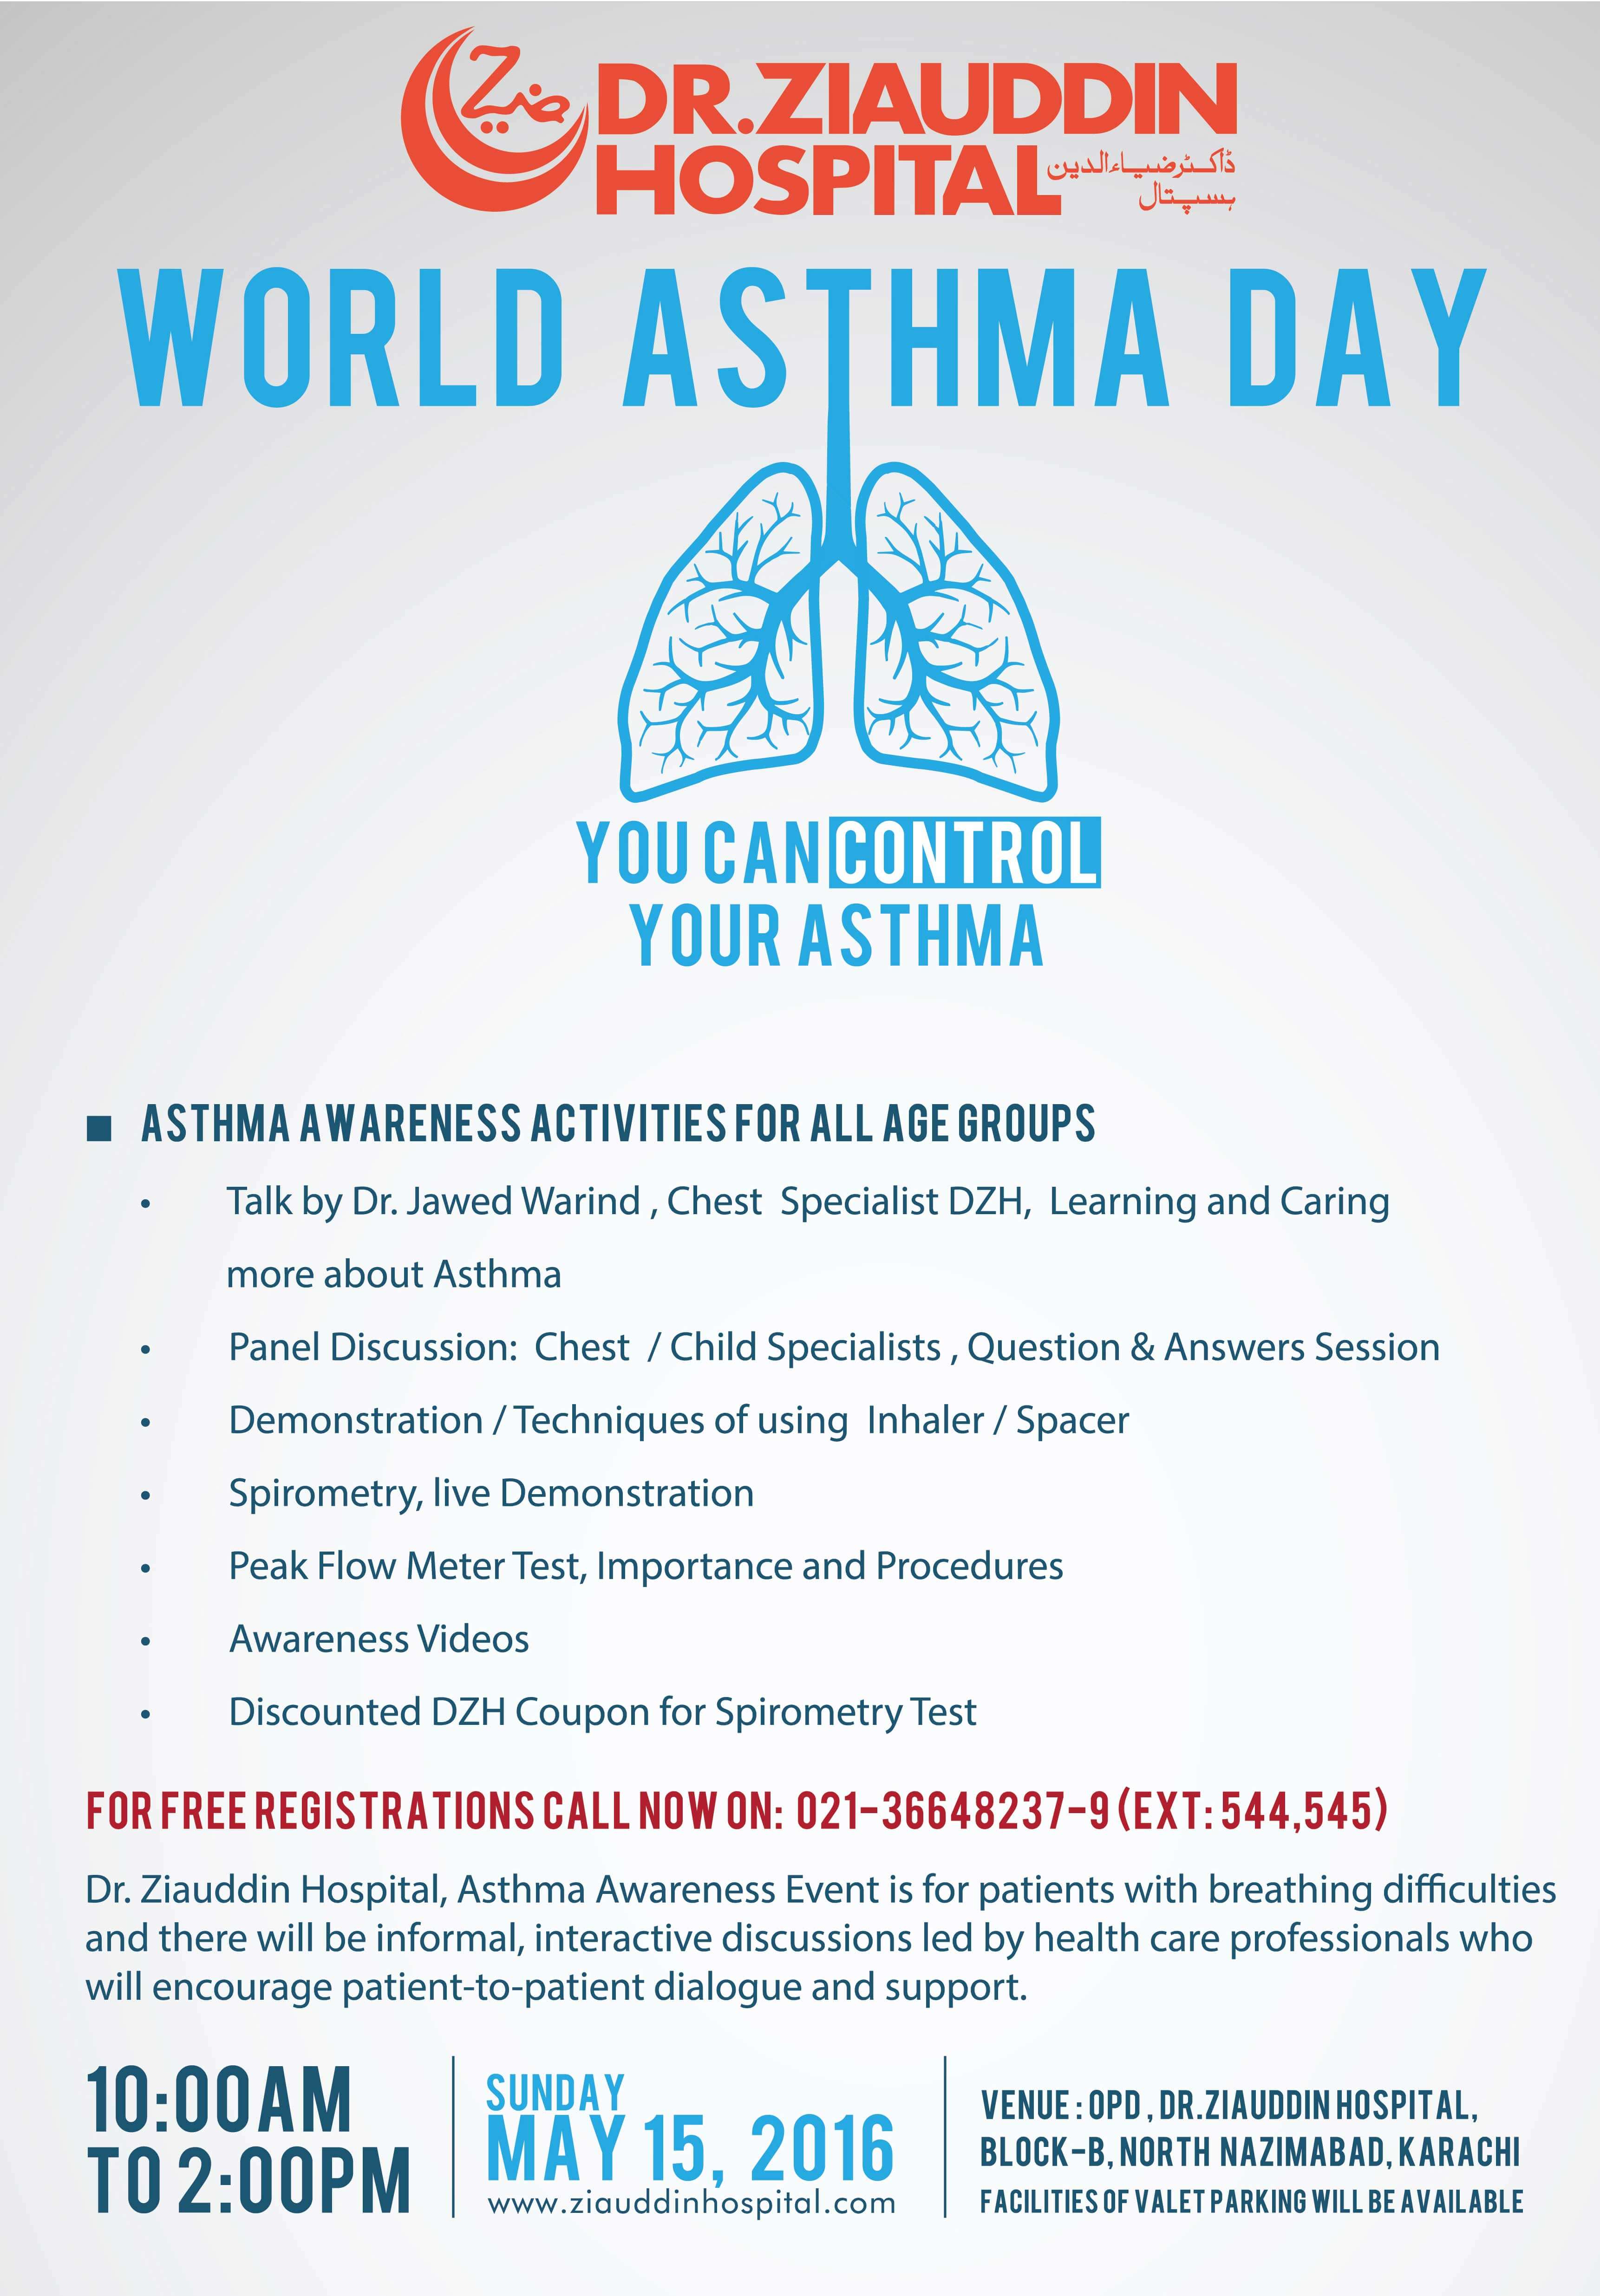 Asthma Awareness event "World Asthma Day" Dr. Ziauddin Hospital